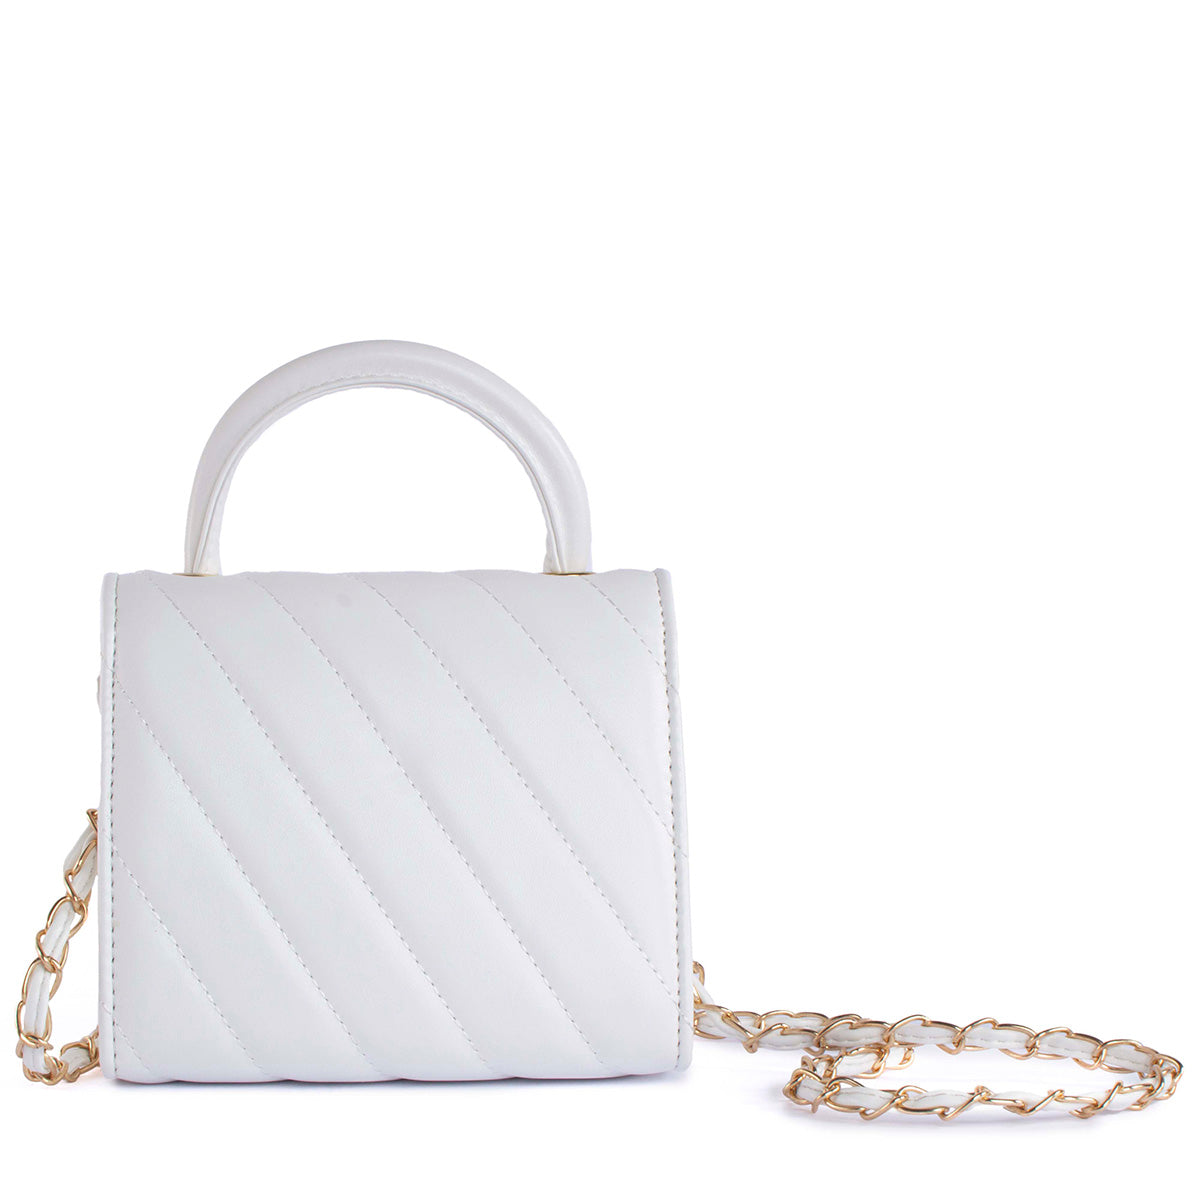 Bolso tipo cartera color blanco con costuras en diagonal